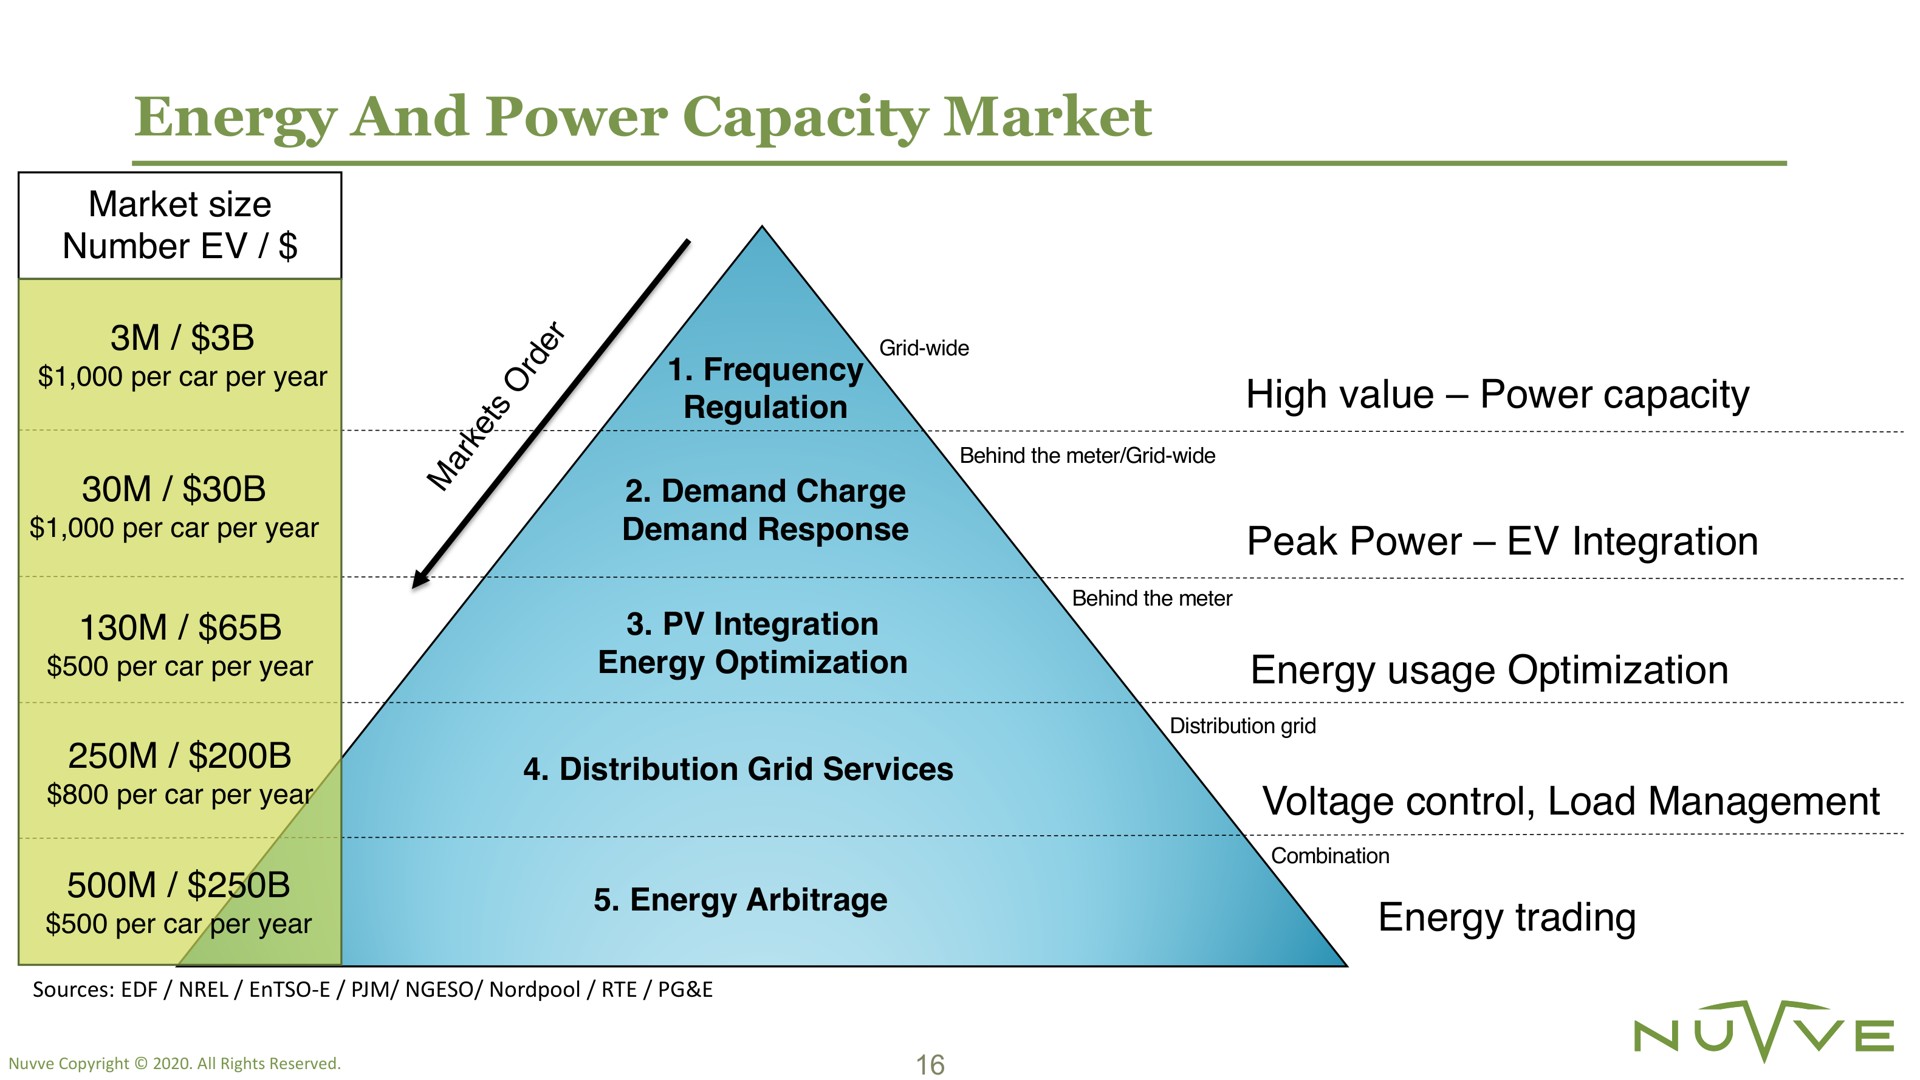 energy and power capacity market eyes per car per year demand response optimization peak integration usage optimization | Nuvve